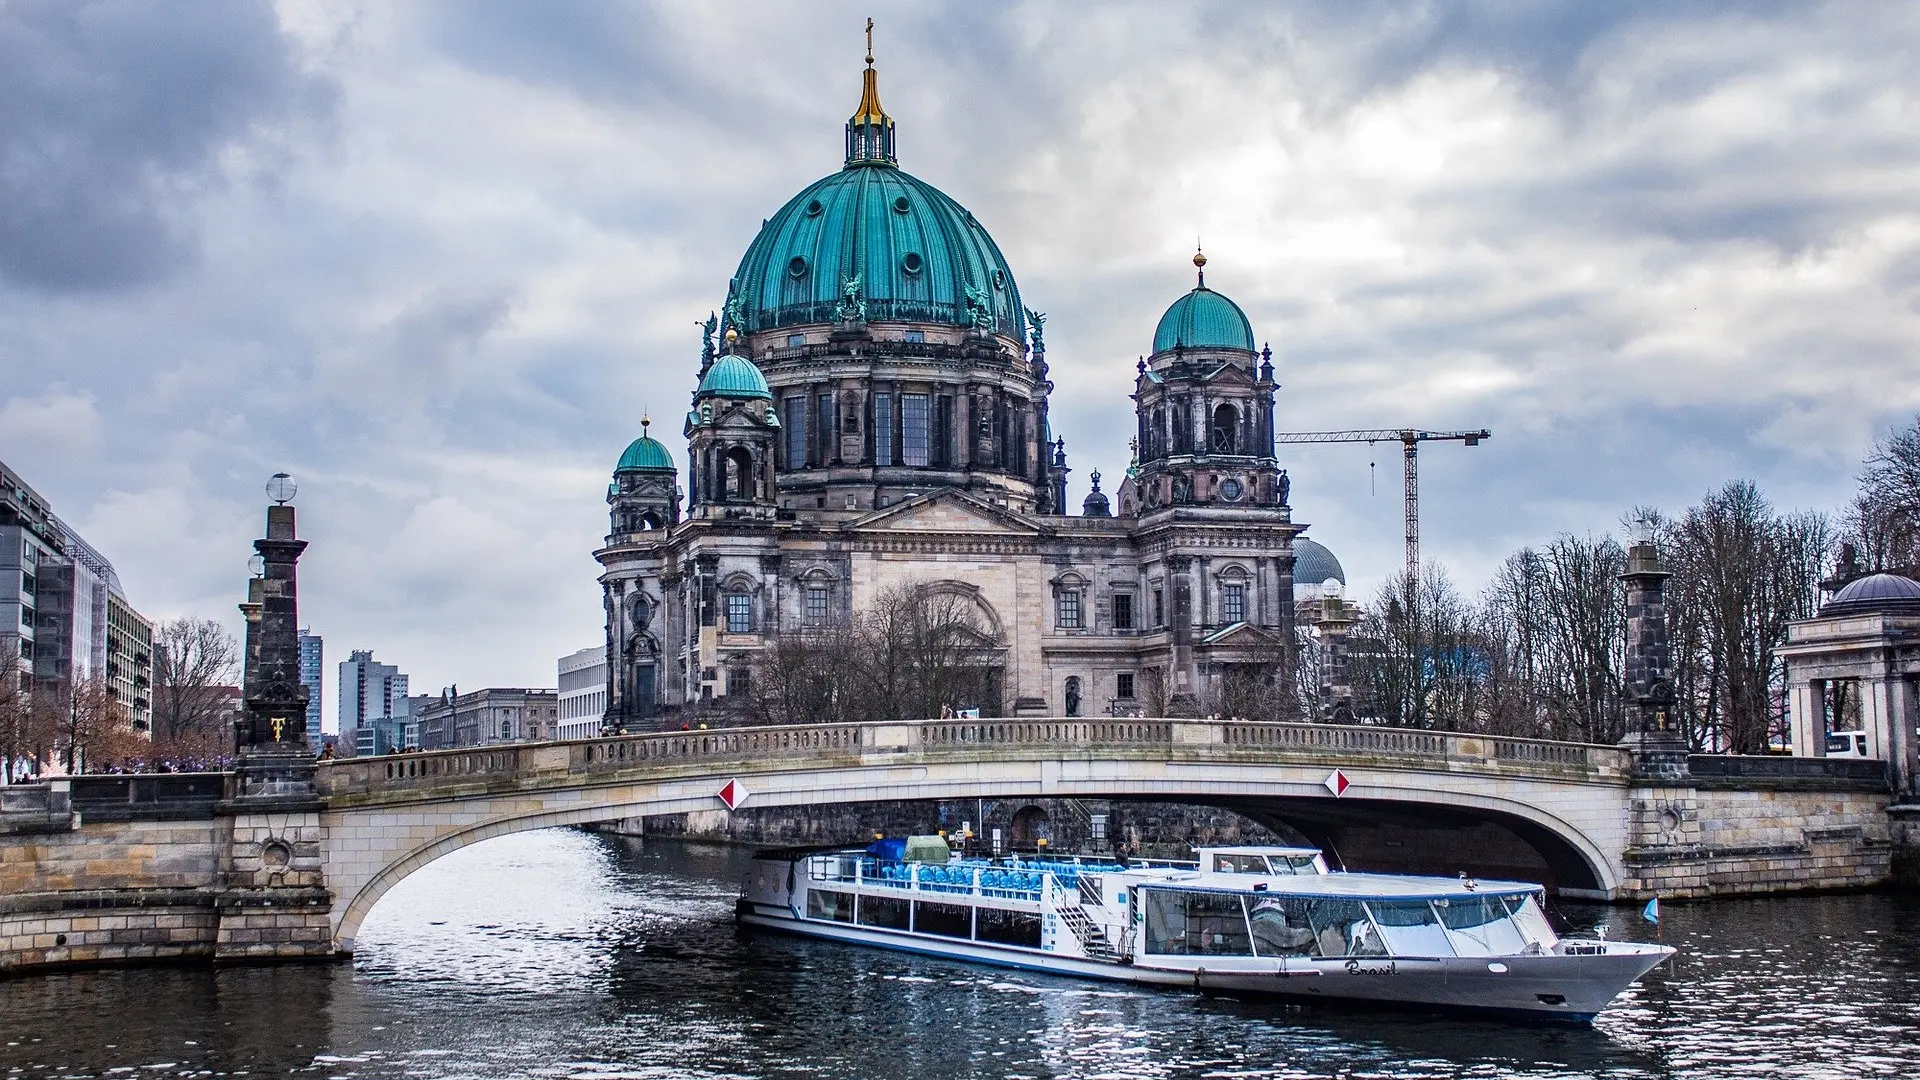 Destinations Articles - Berlin Travel Guide